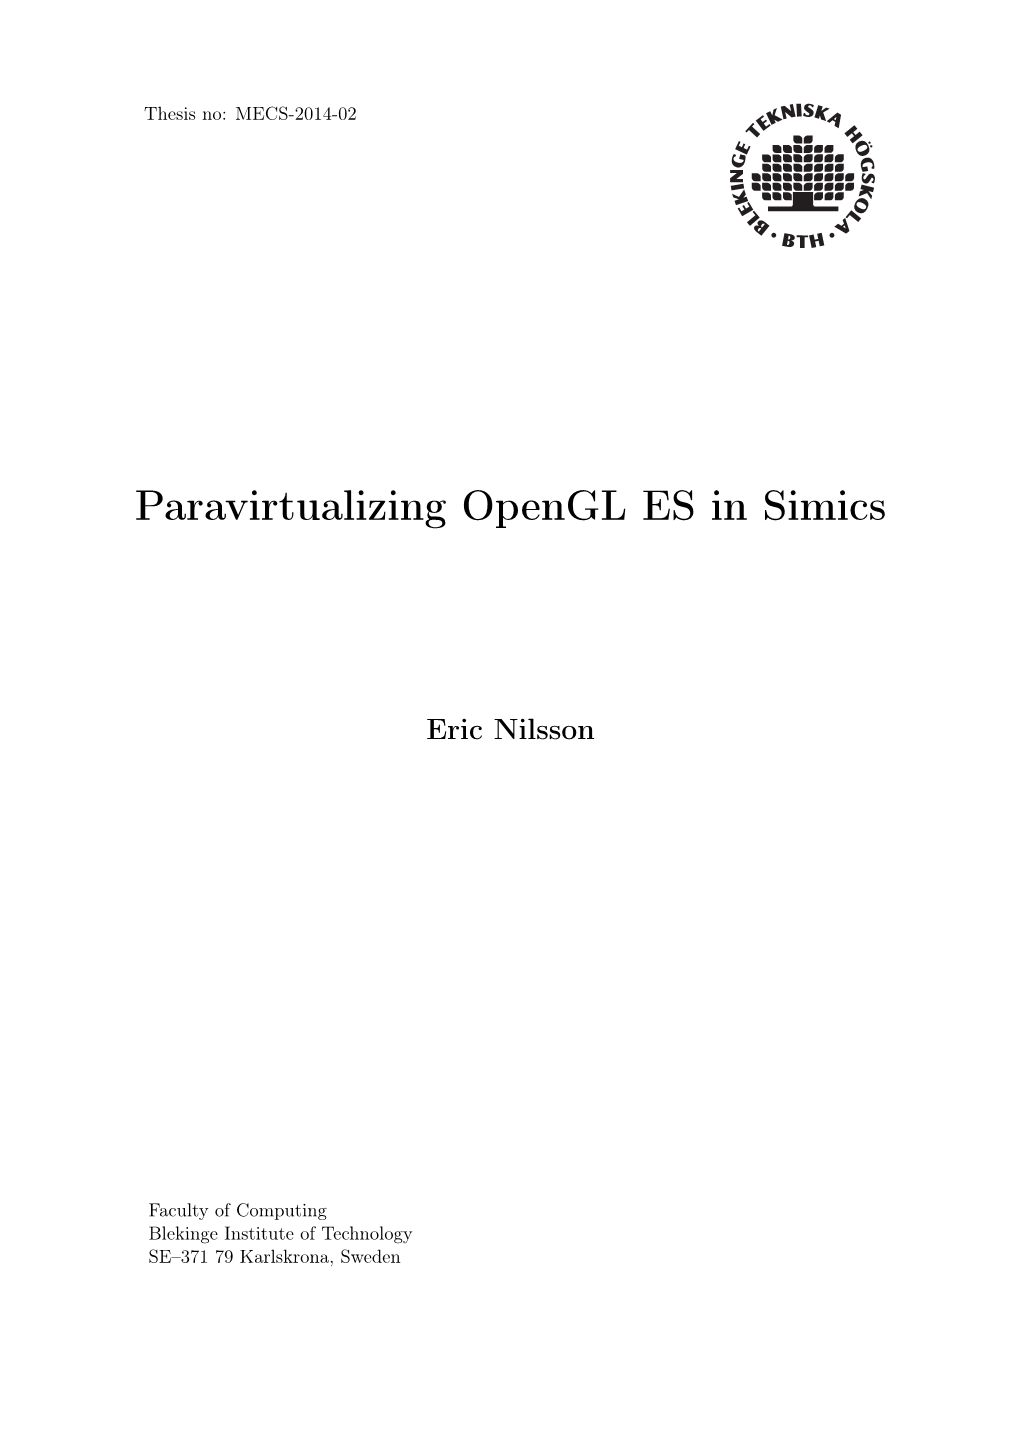 Paravirtualizing Opengl ES in Simics